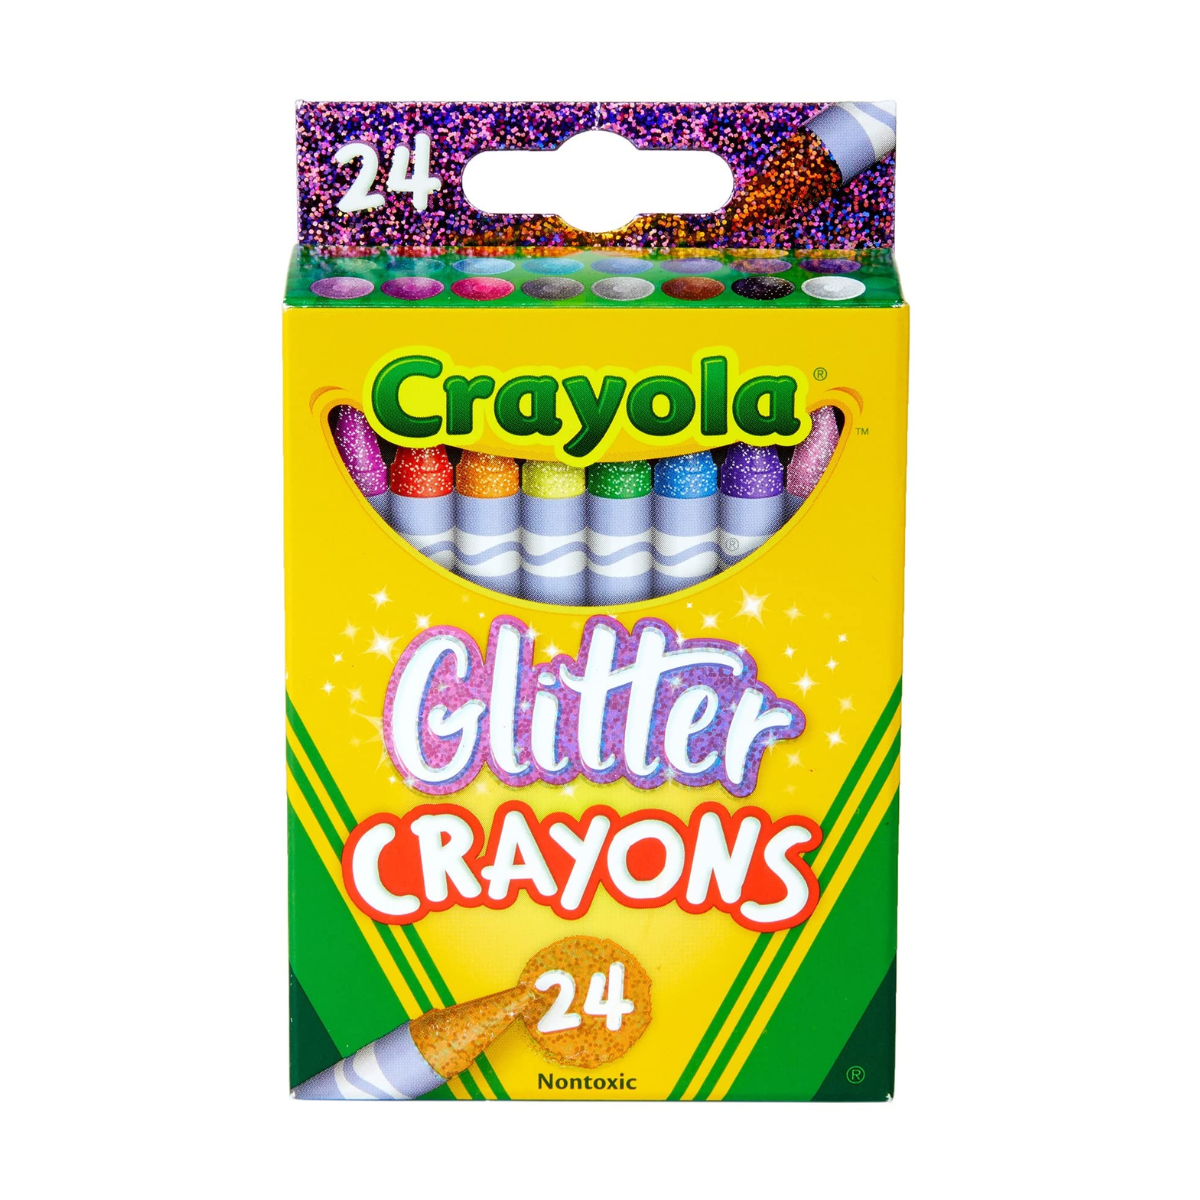 24 Glitter Crayolas